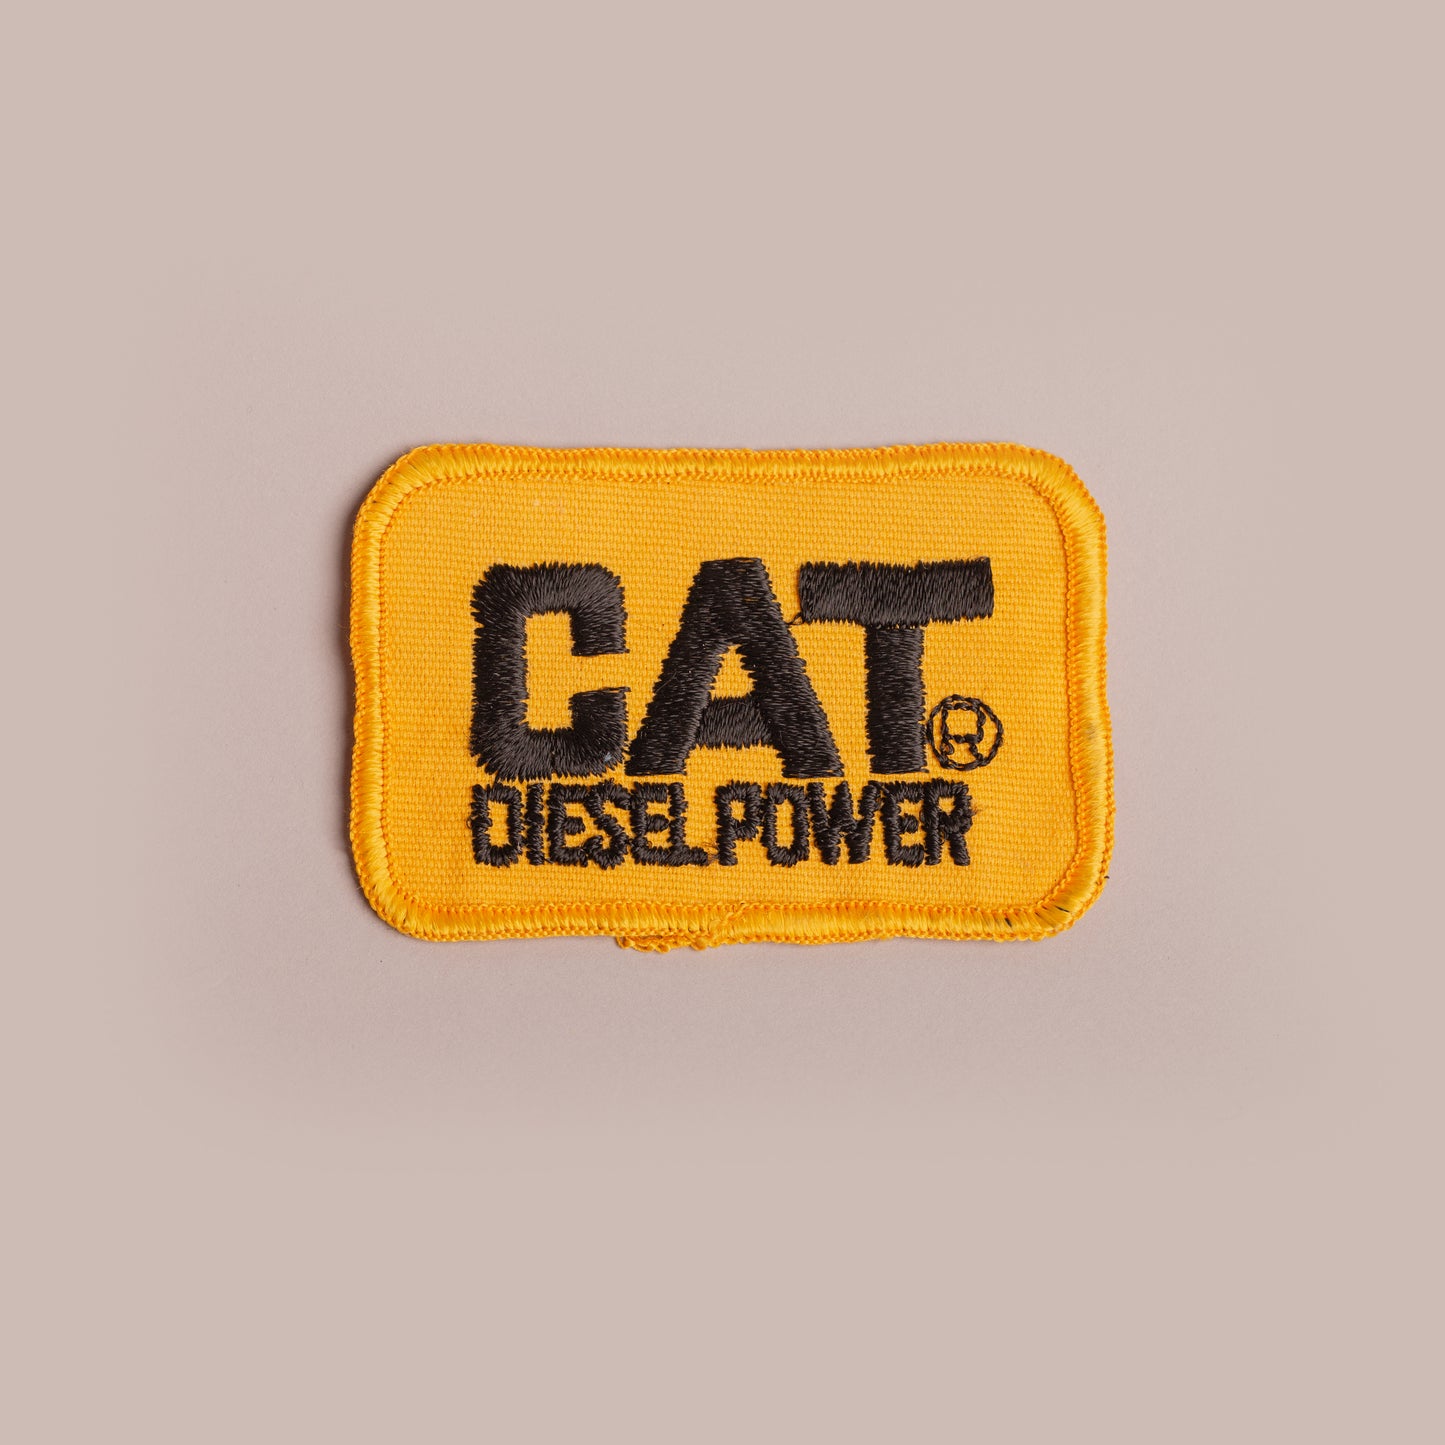 Vintage Patch - CAT Diesel Power